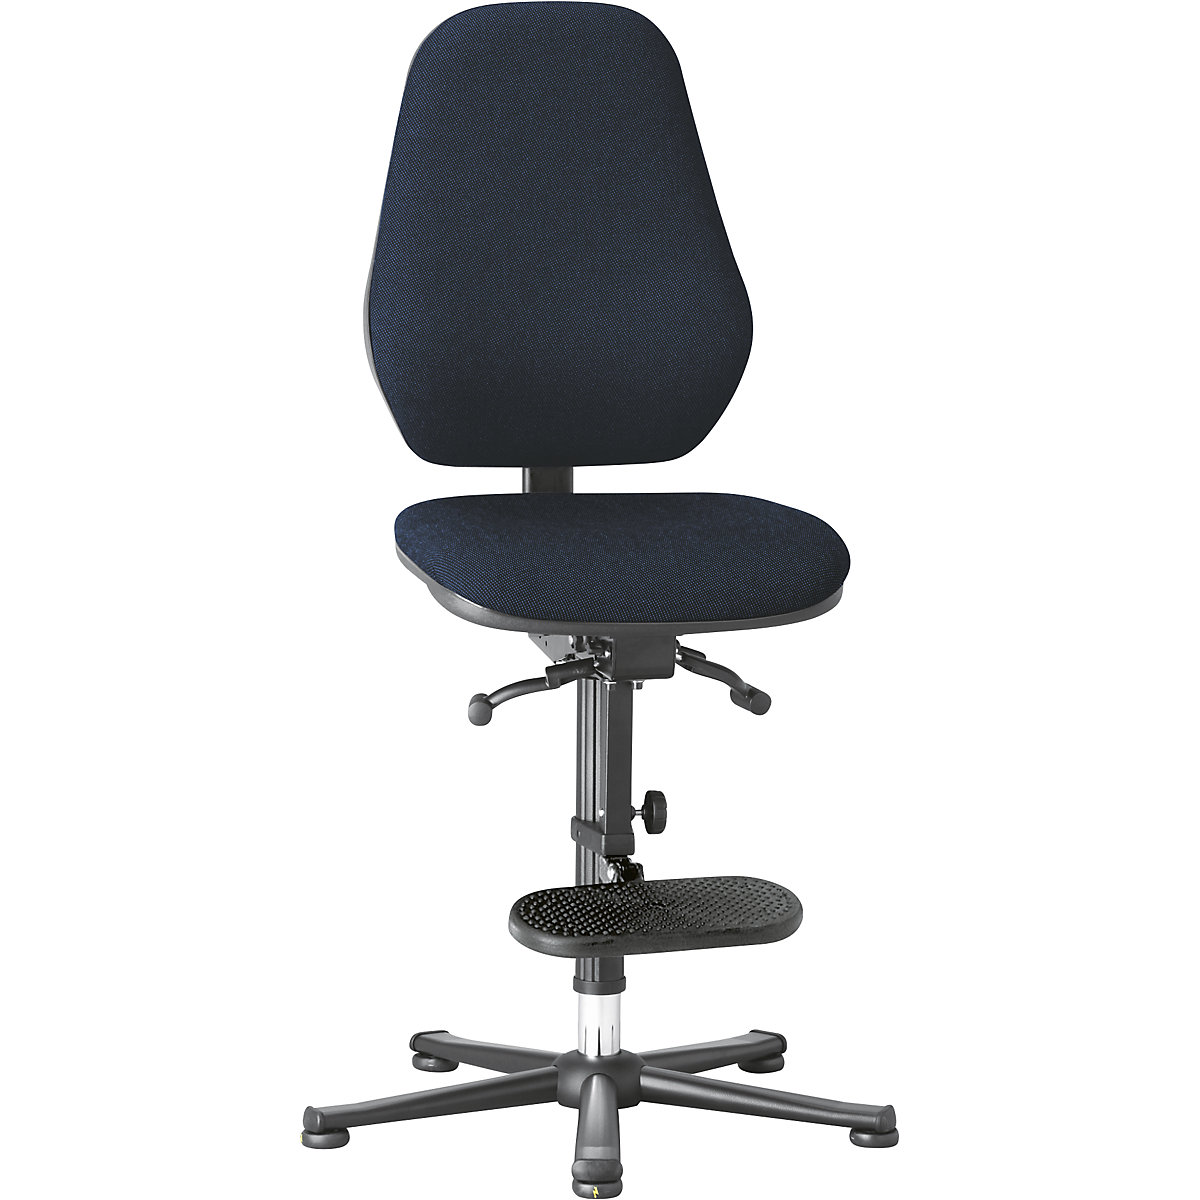 Pracovní otočná židle – bimos, s ochranou ESD, plynová pružina, patky, pomůcka pro výstup, modrý látkový potah-12